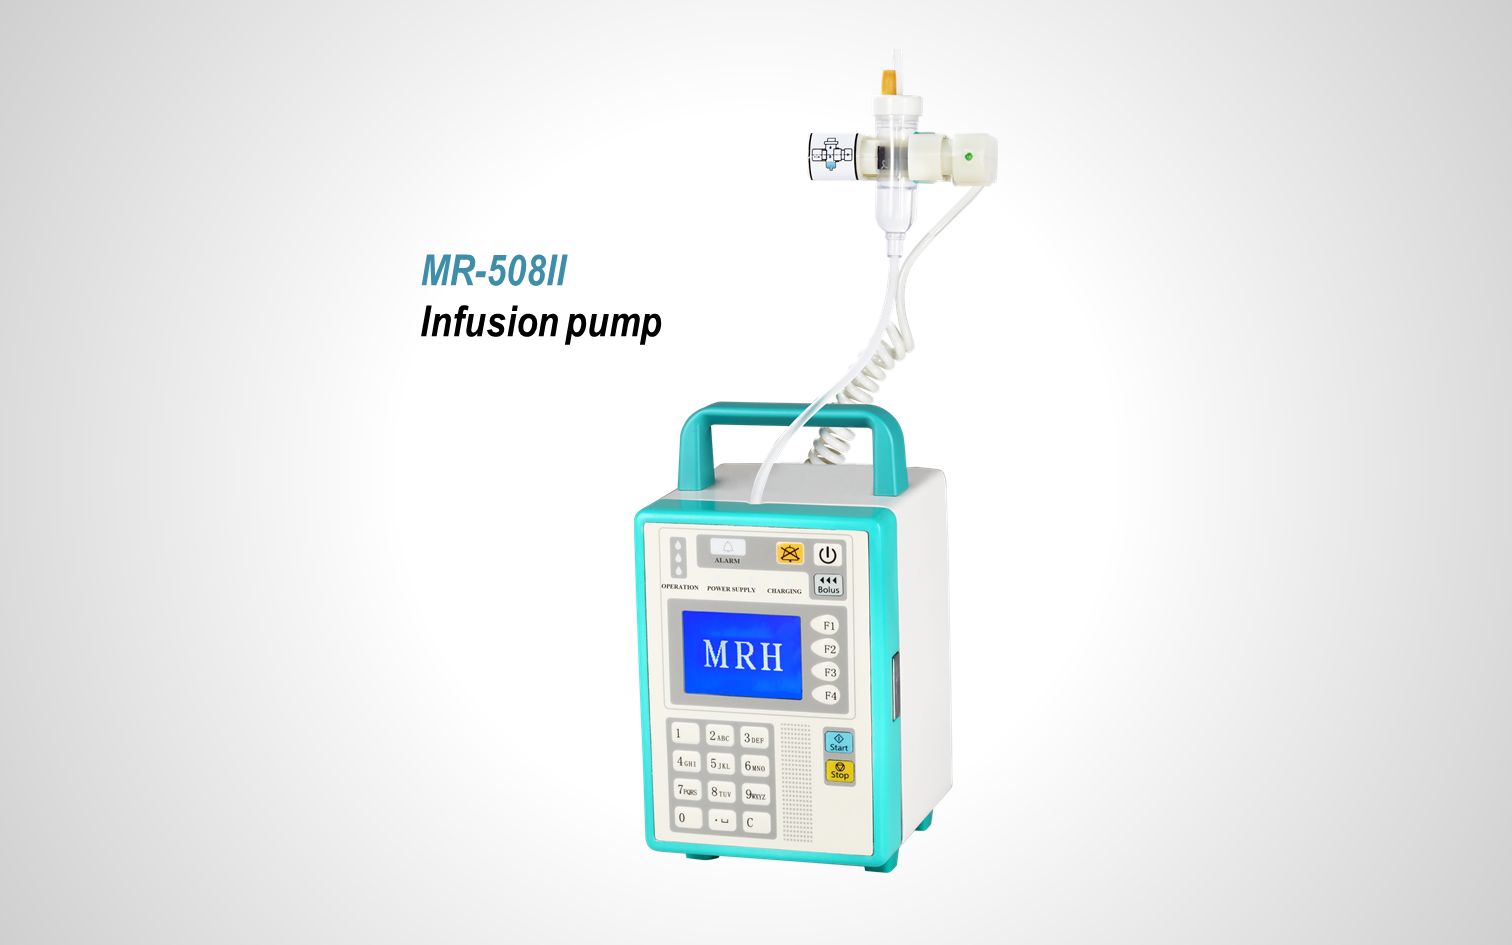 MR-508II Infusion pump